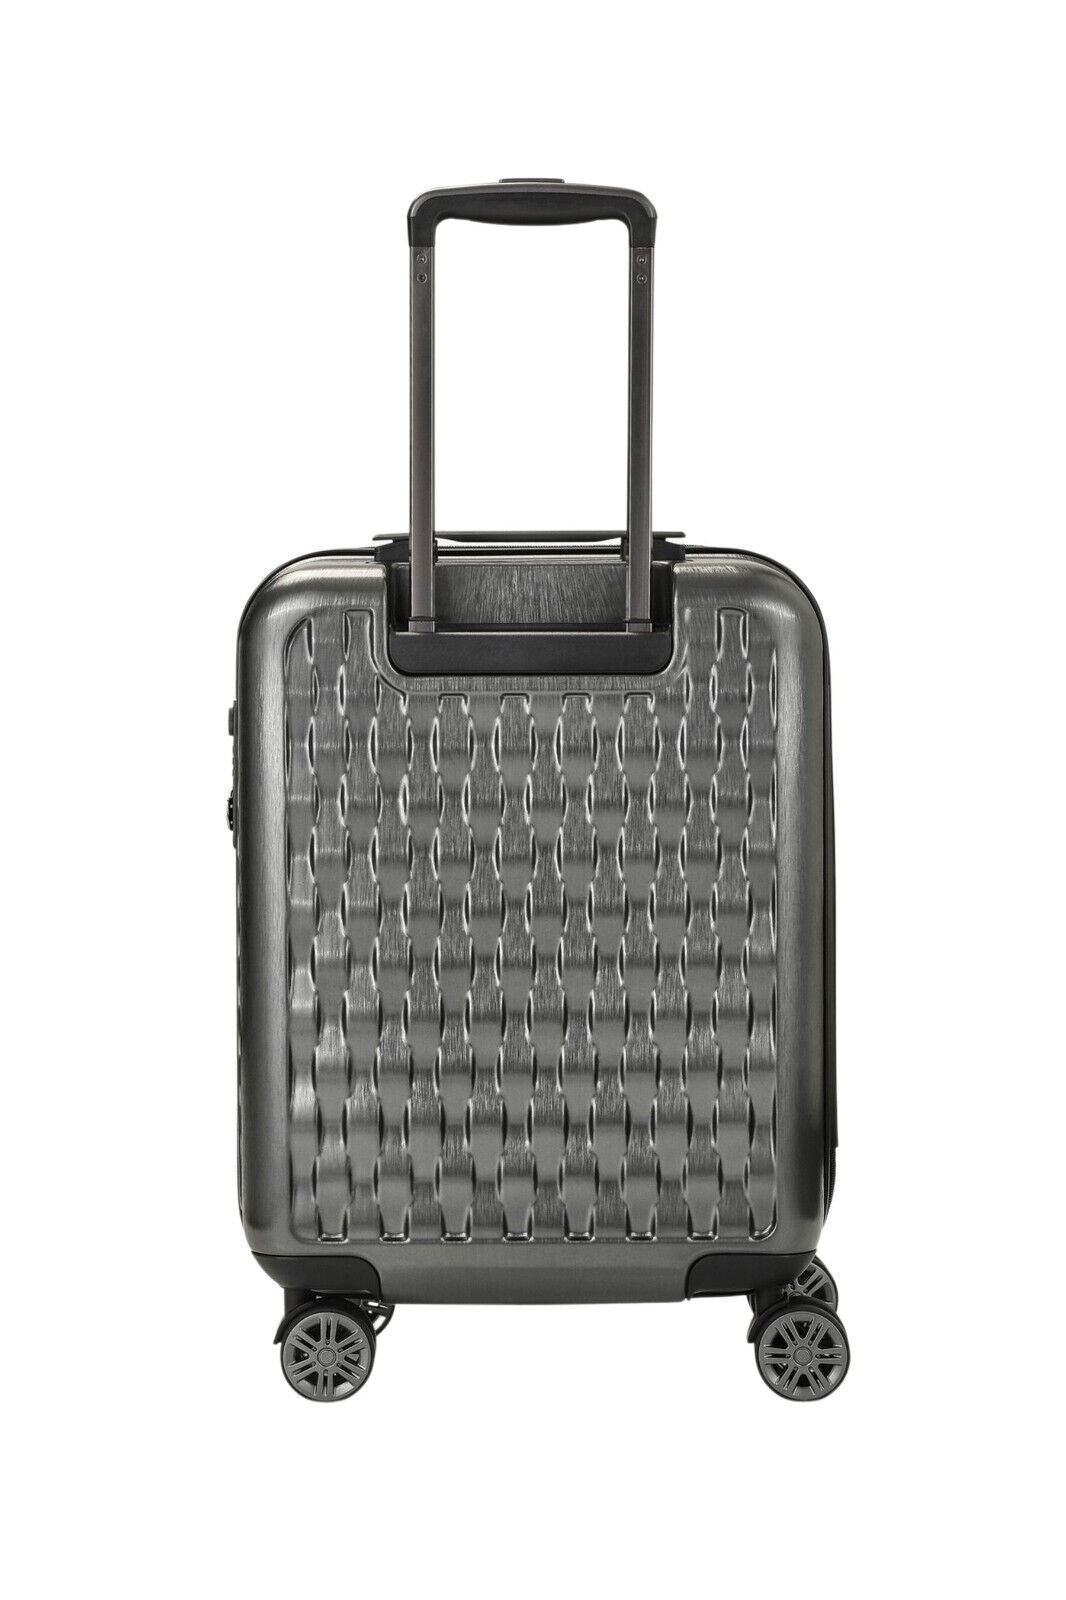 Hard Shell Grey Suitcase Set 8 Wheel Luggage Trolley Case Holiday Travel Bag